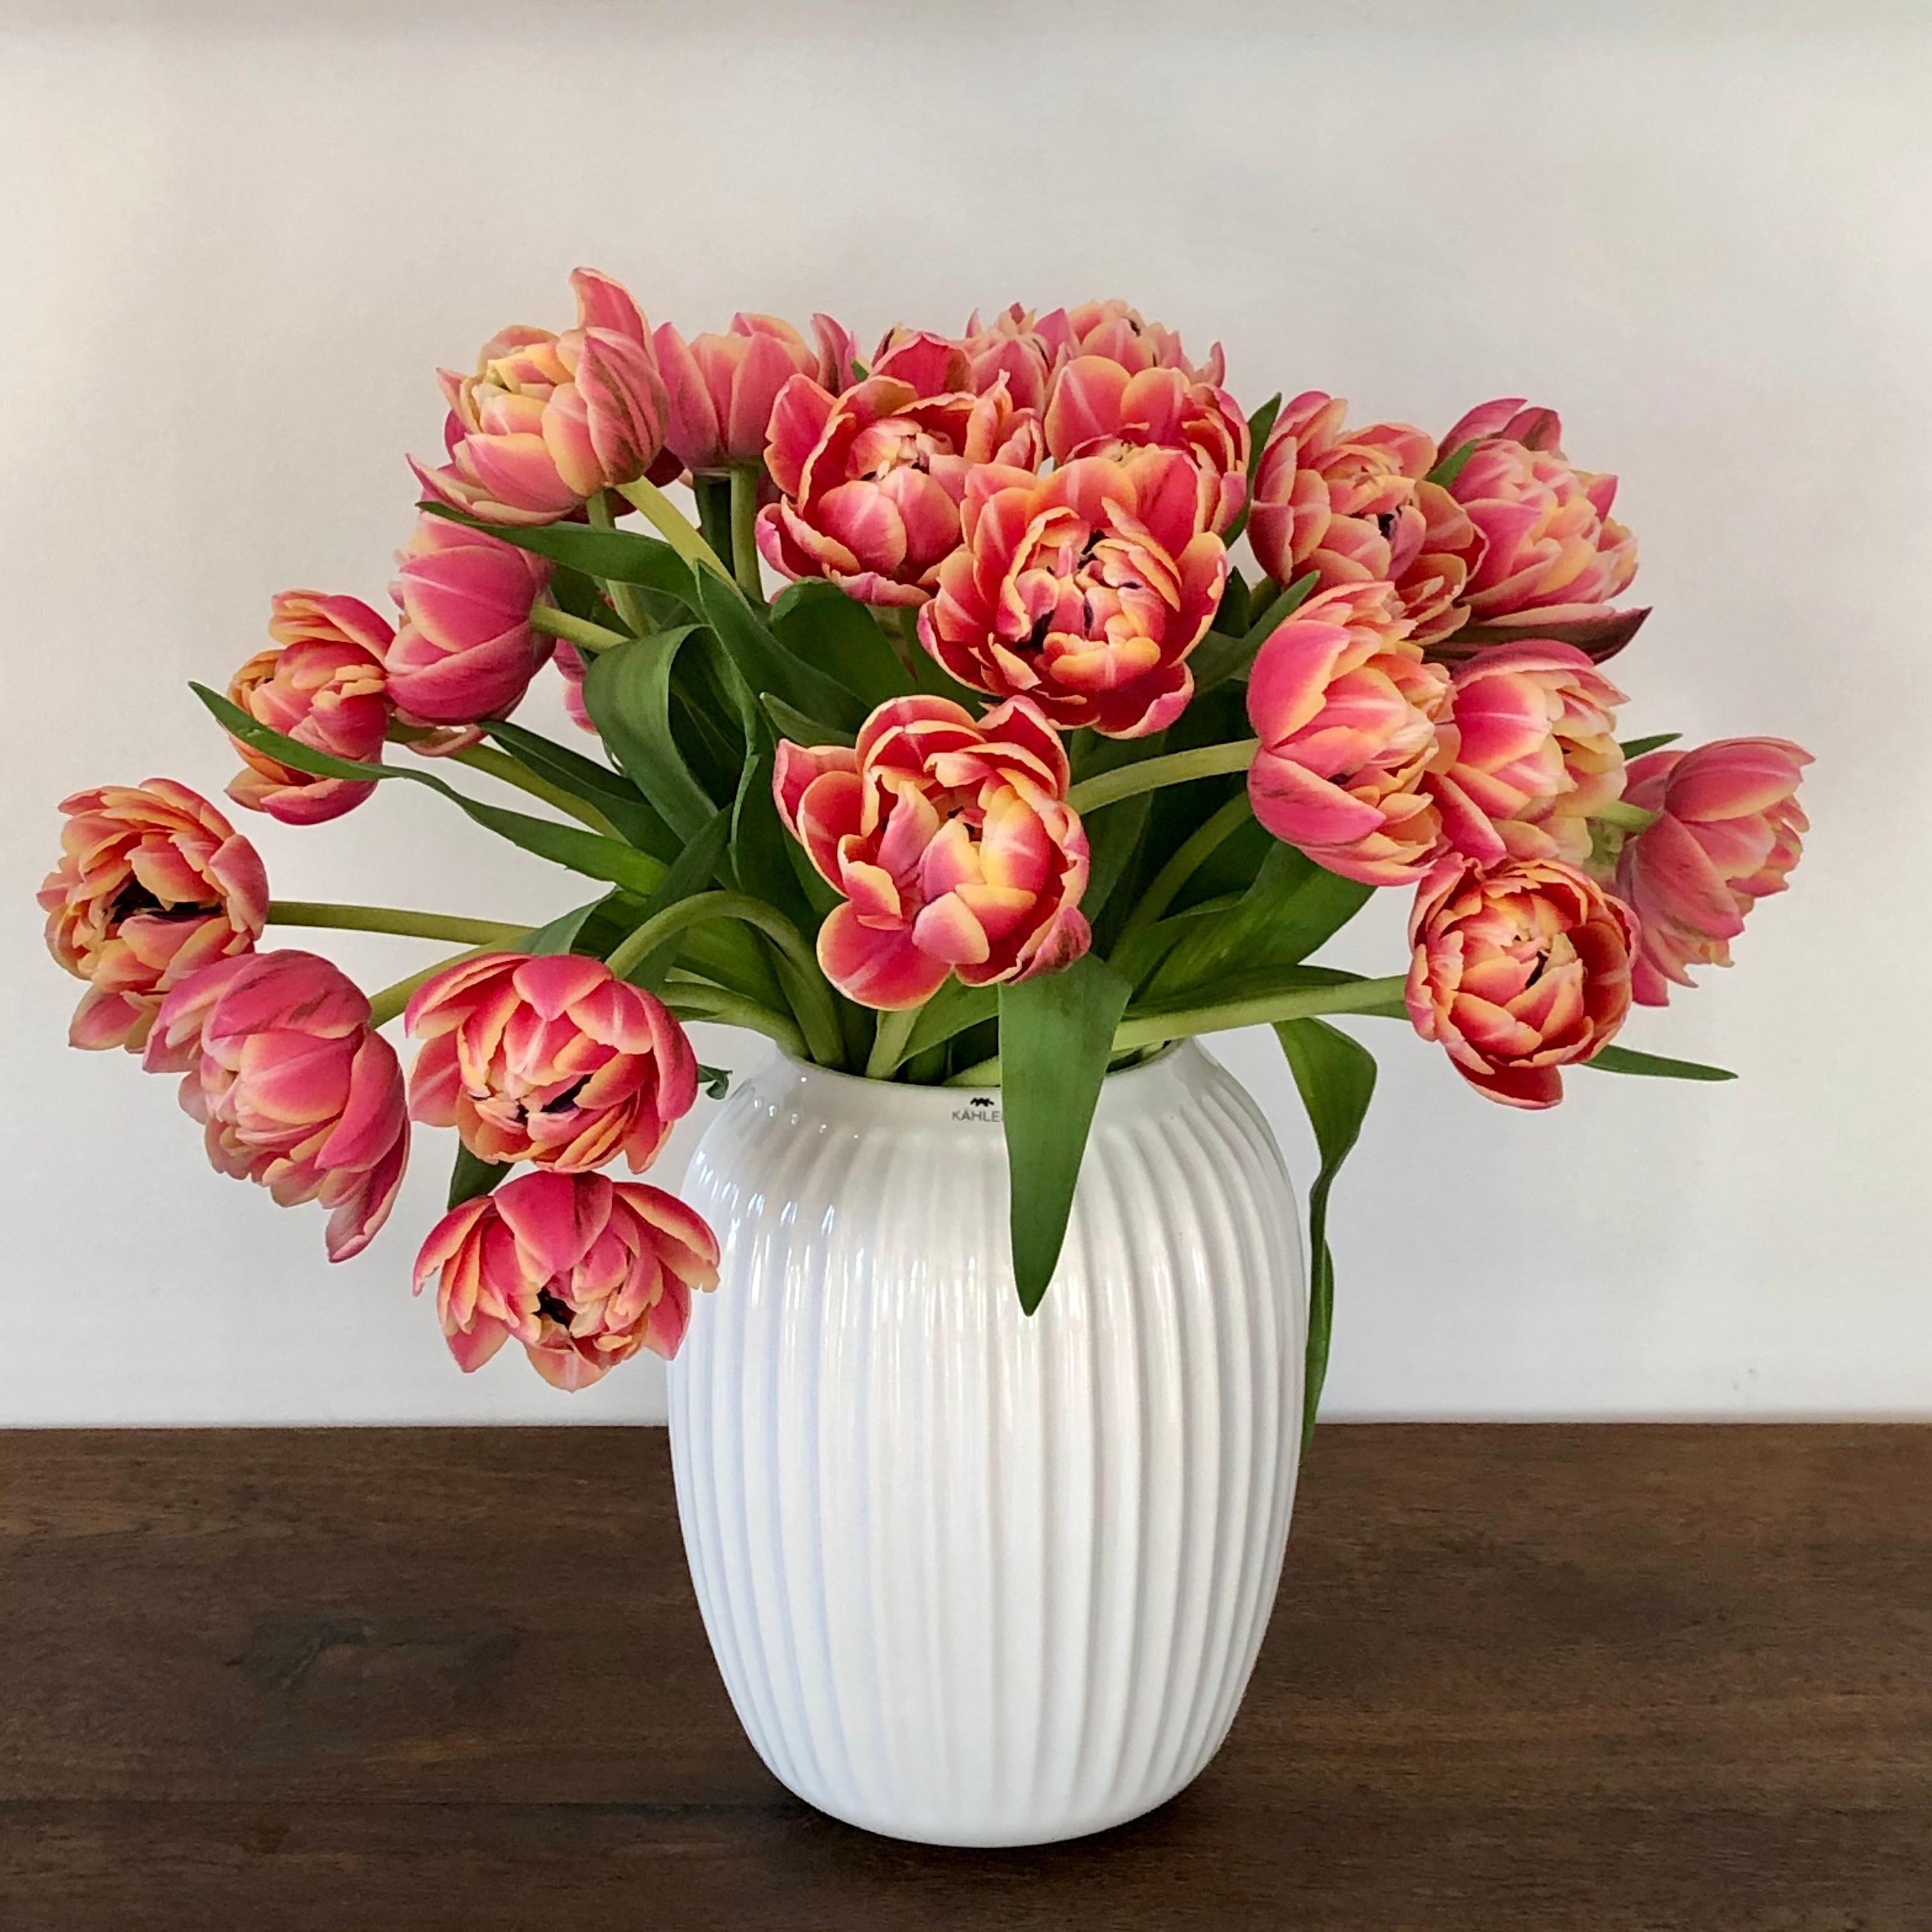 Frühlingshafte Sonntagsgrüße! 
#tulpen #blumenliebe